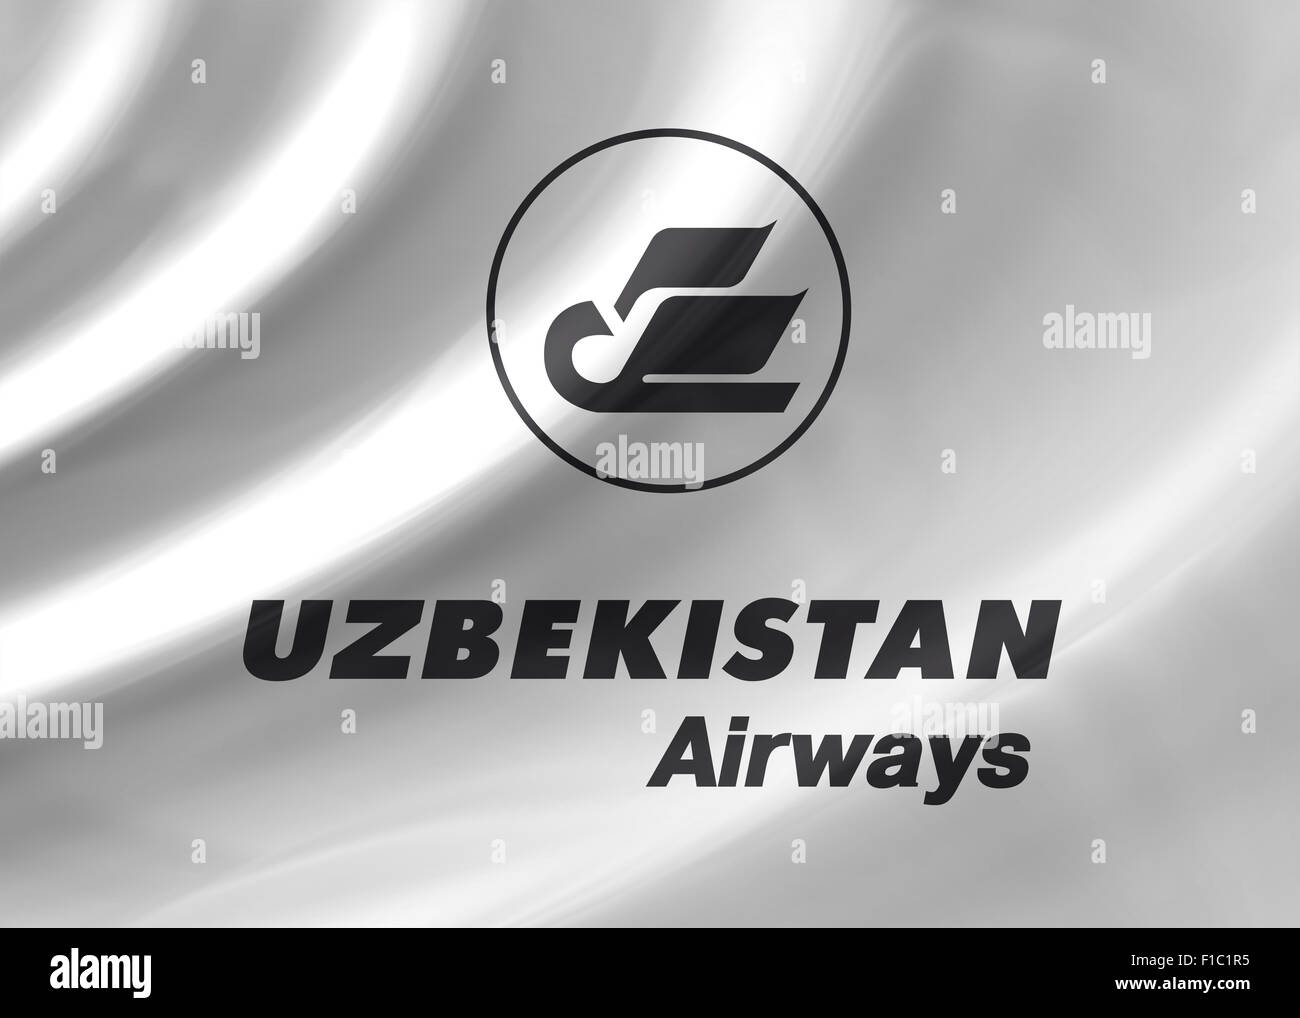 Uzbekistan Airways logo icon flag symbol emblem sign Stock Photo